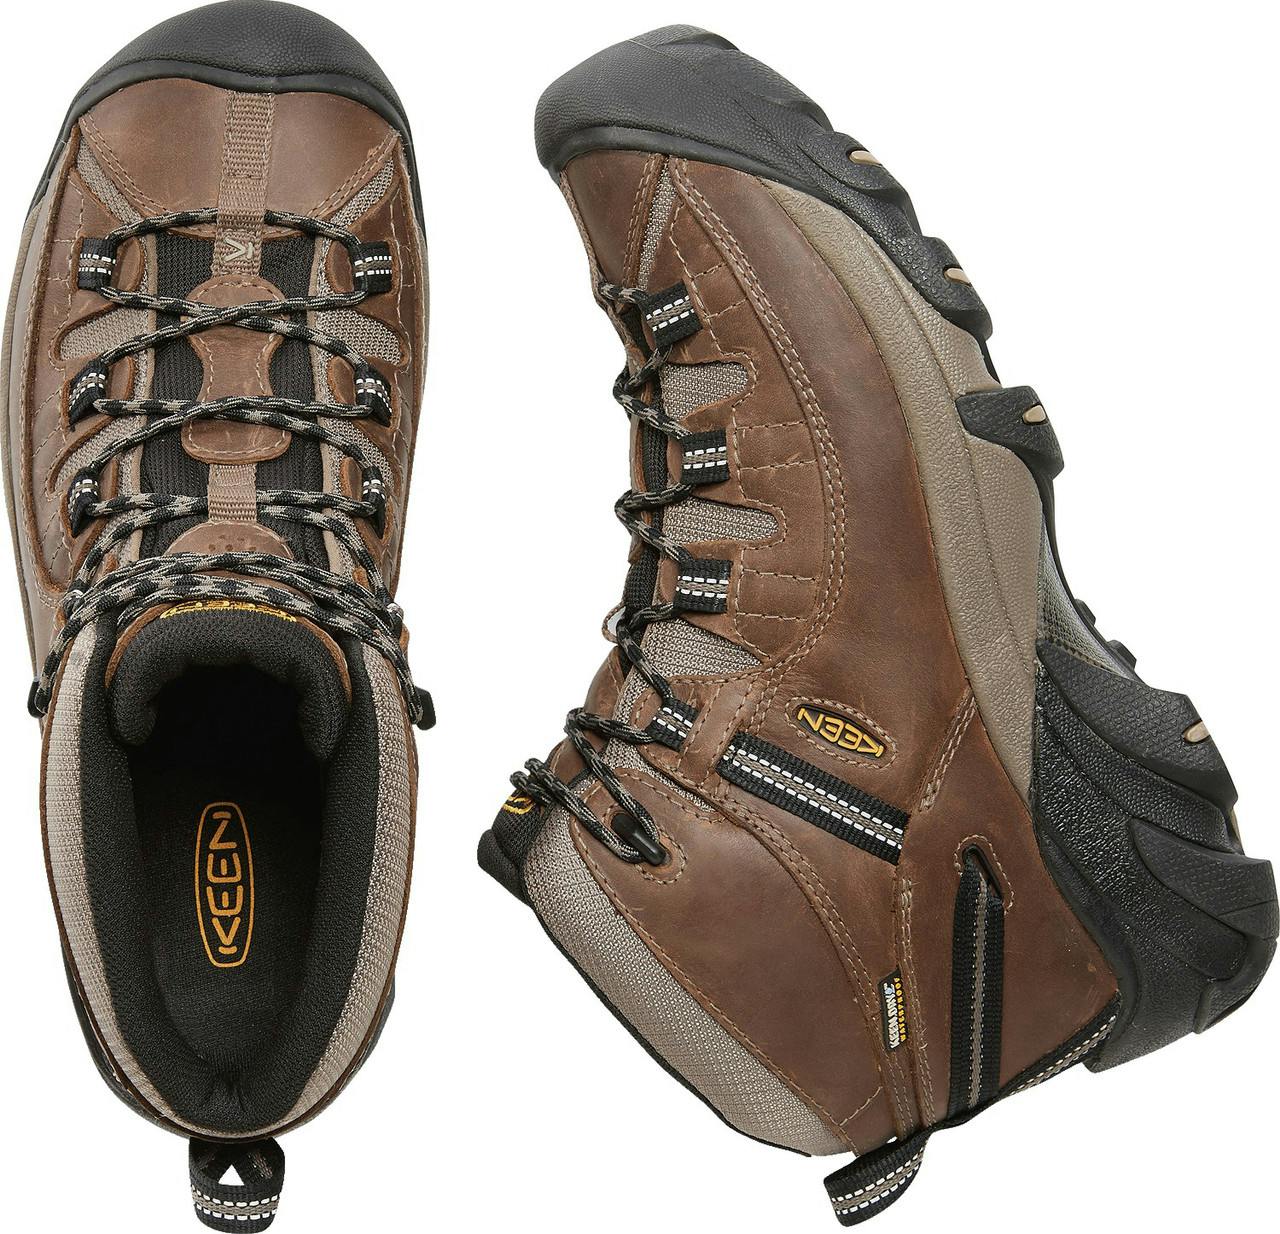 Targhee II Mid Waterproof Light Trail Shoes Shitake/Brindle